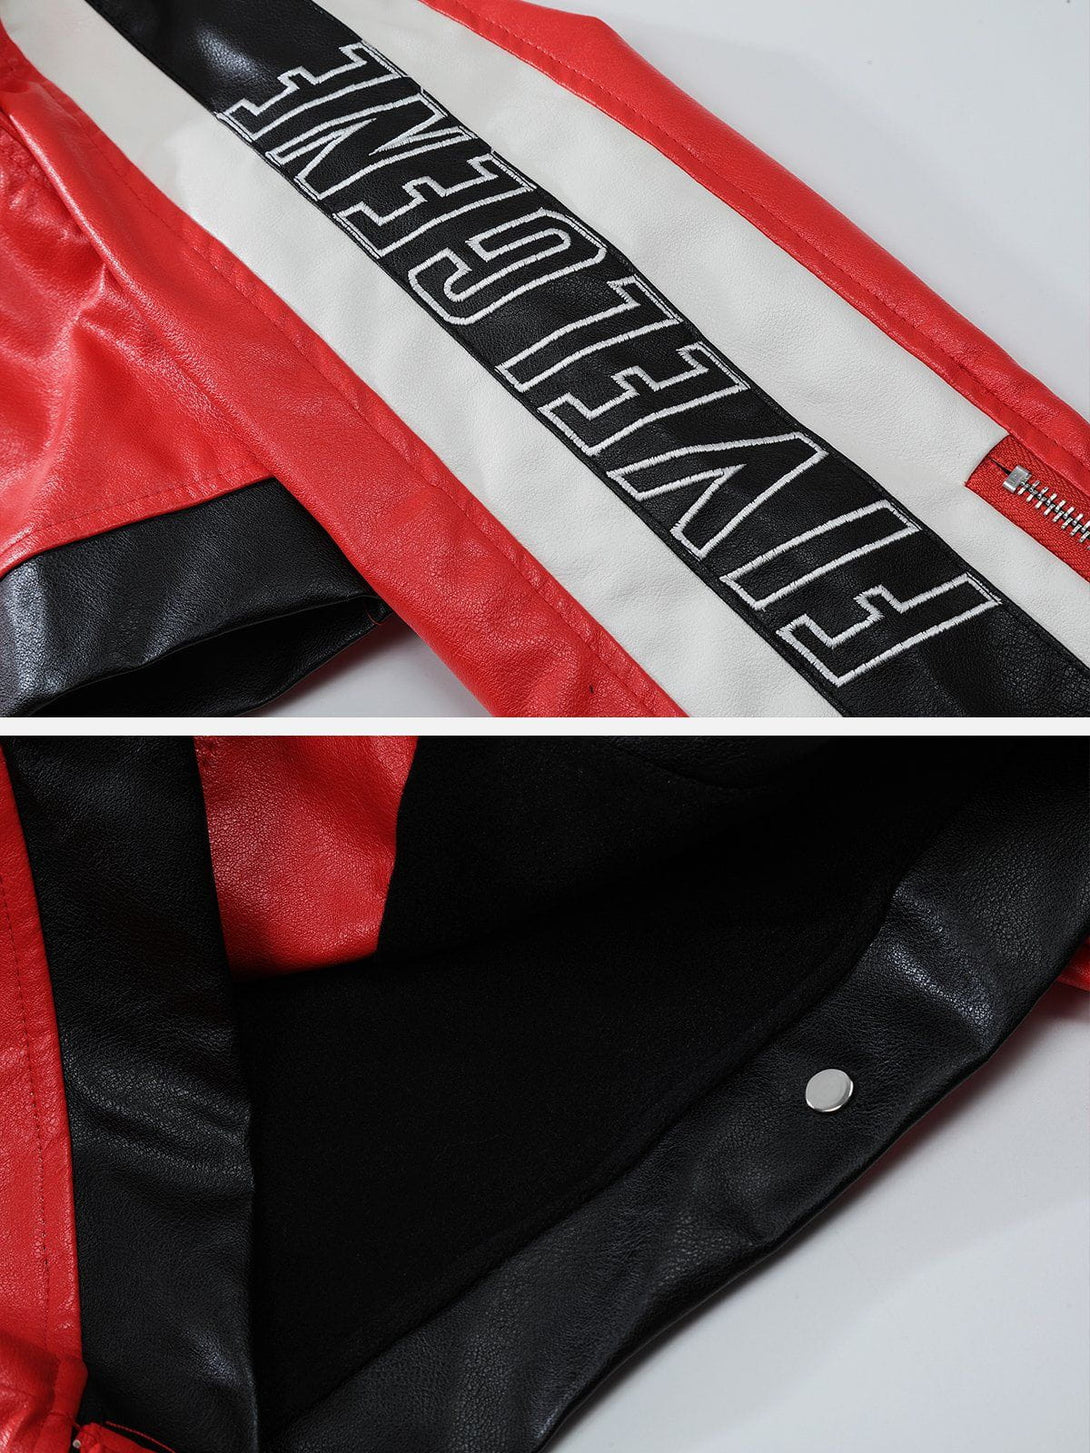 Levefly - Pu Leather Crop Motorcycle Jacket - Streetwear Fashion - levefly.com